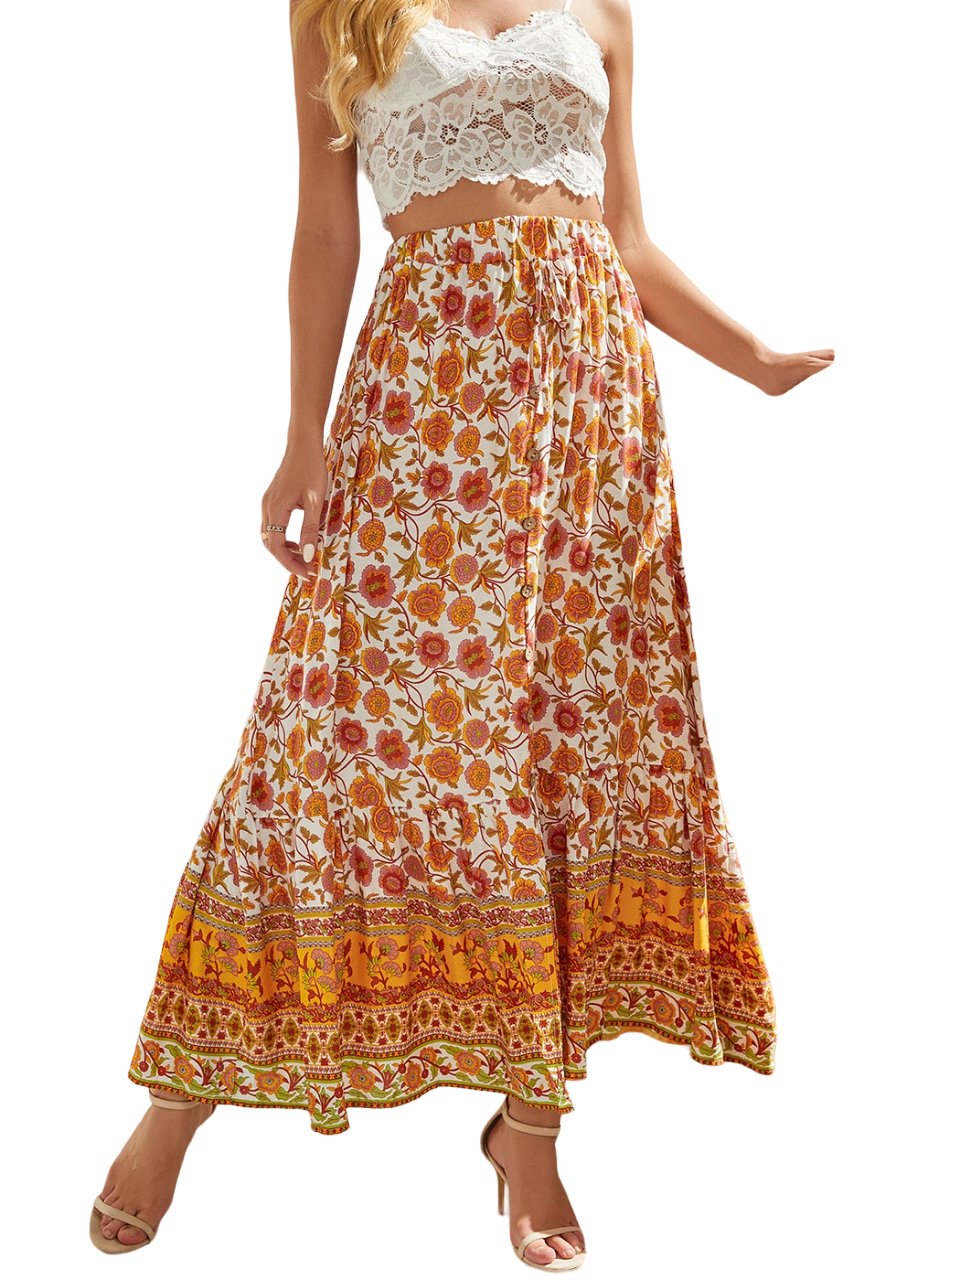 Boho Retro Floral Print Skirt - Skirts